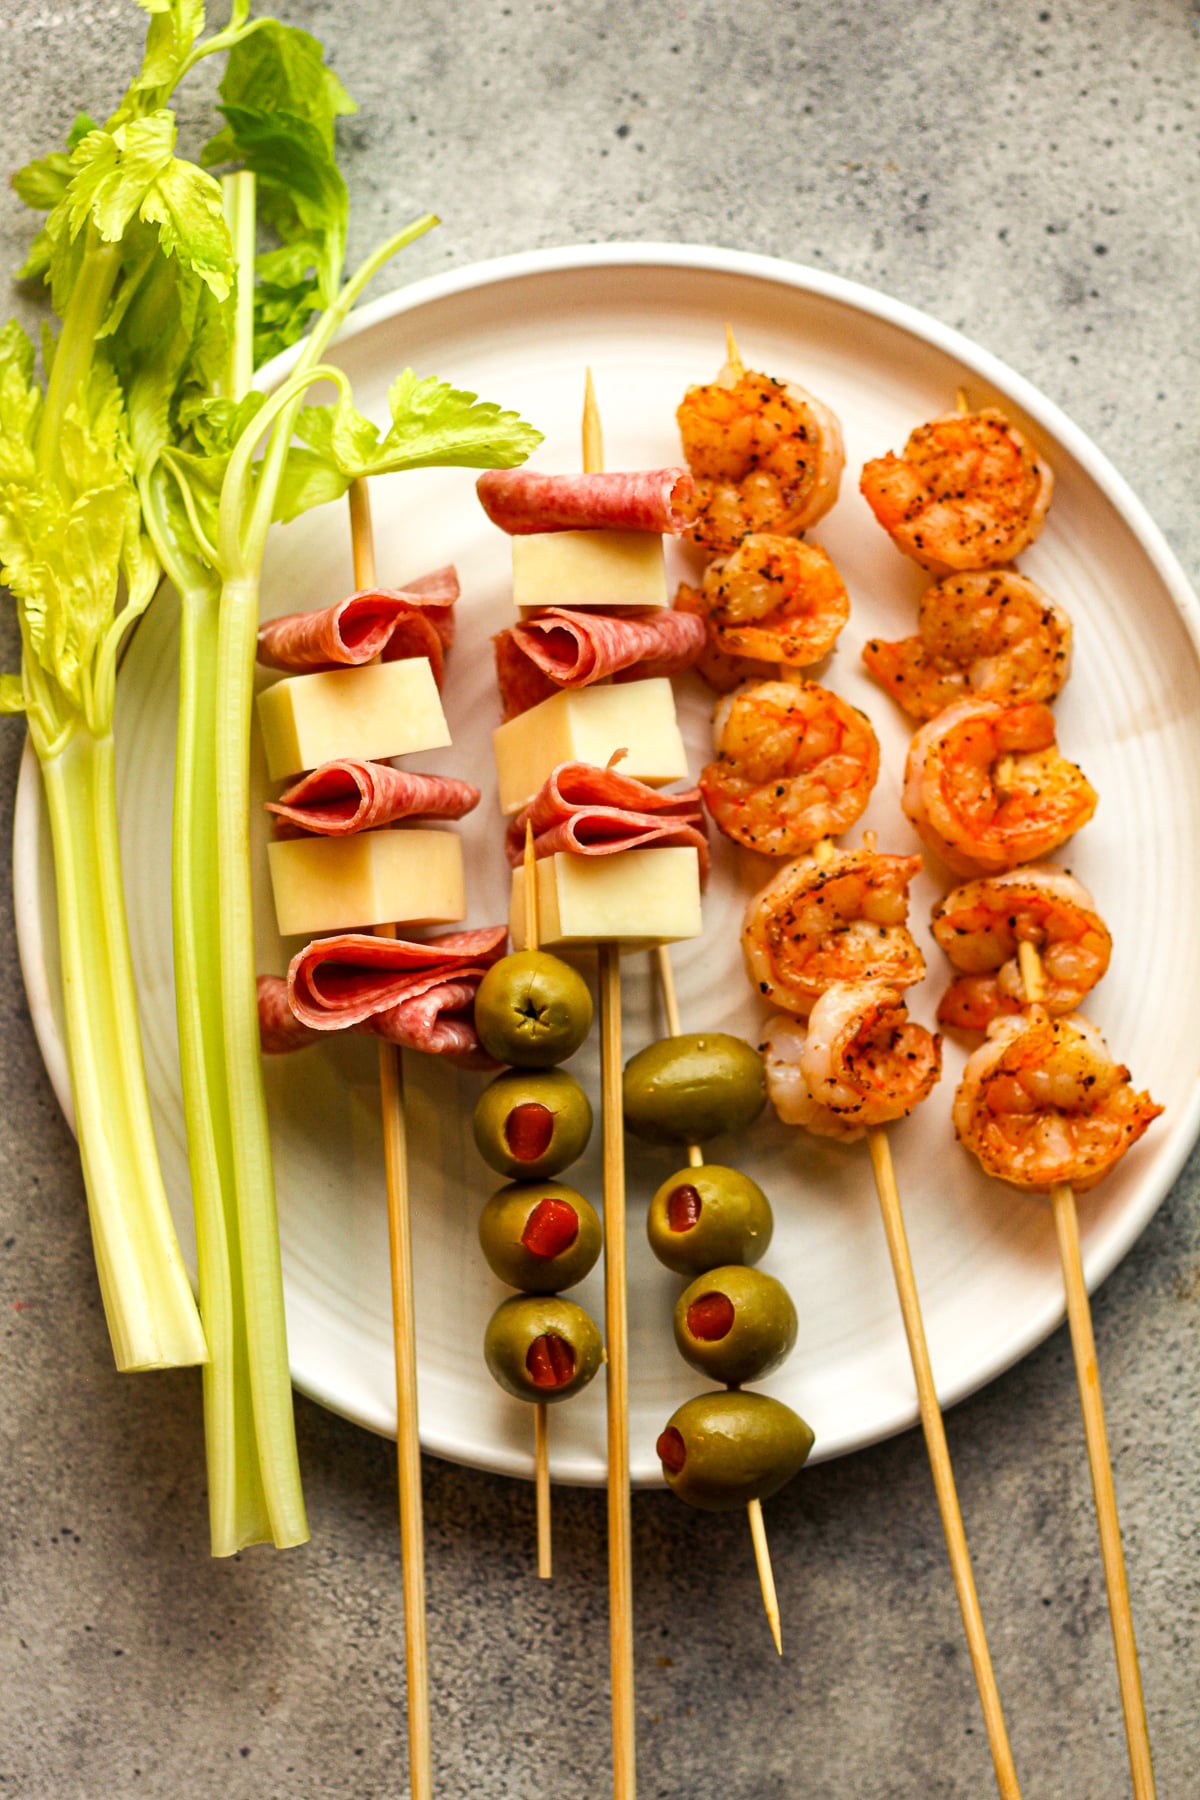 A plate of garnishes - celery, meat and salami skewer, olives, and shrimp.